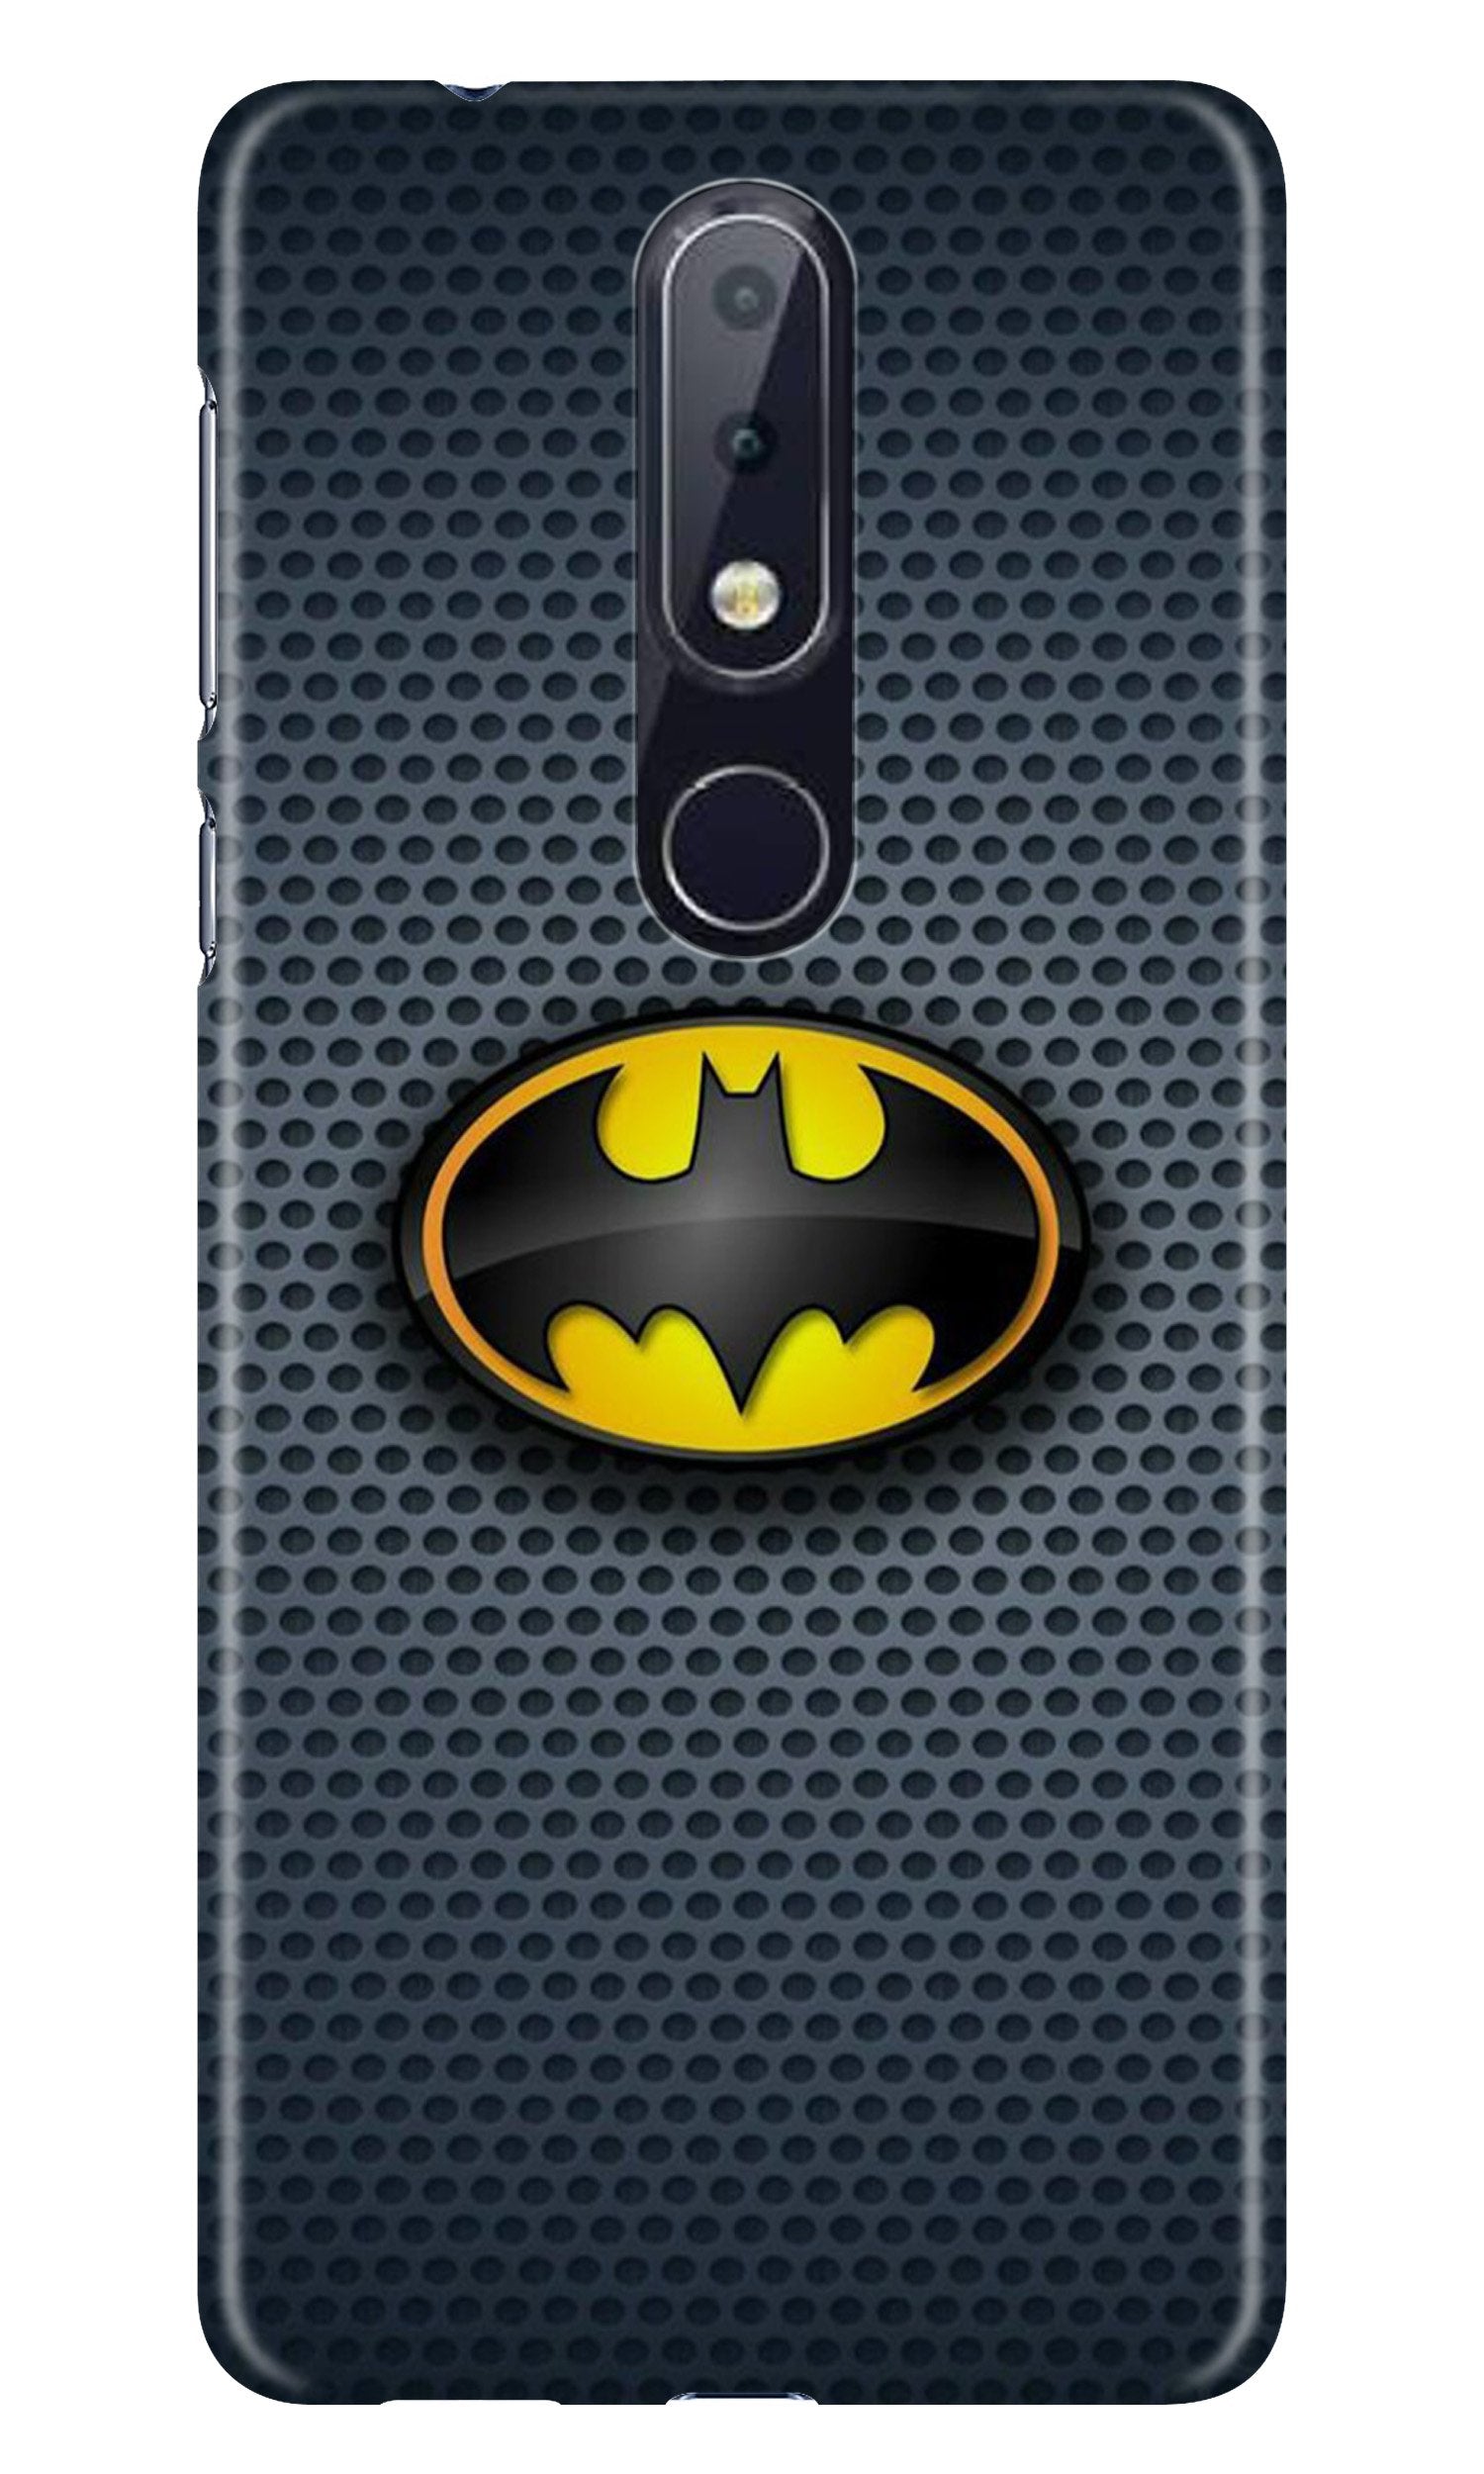 Batman Case for Nokia 7.1 (Design No. 244)